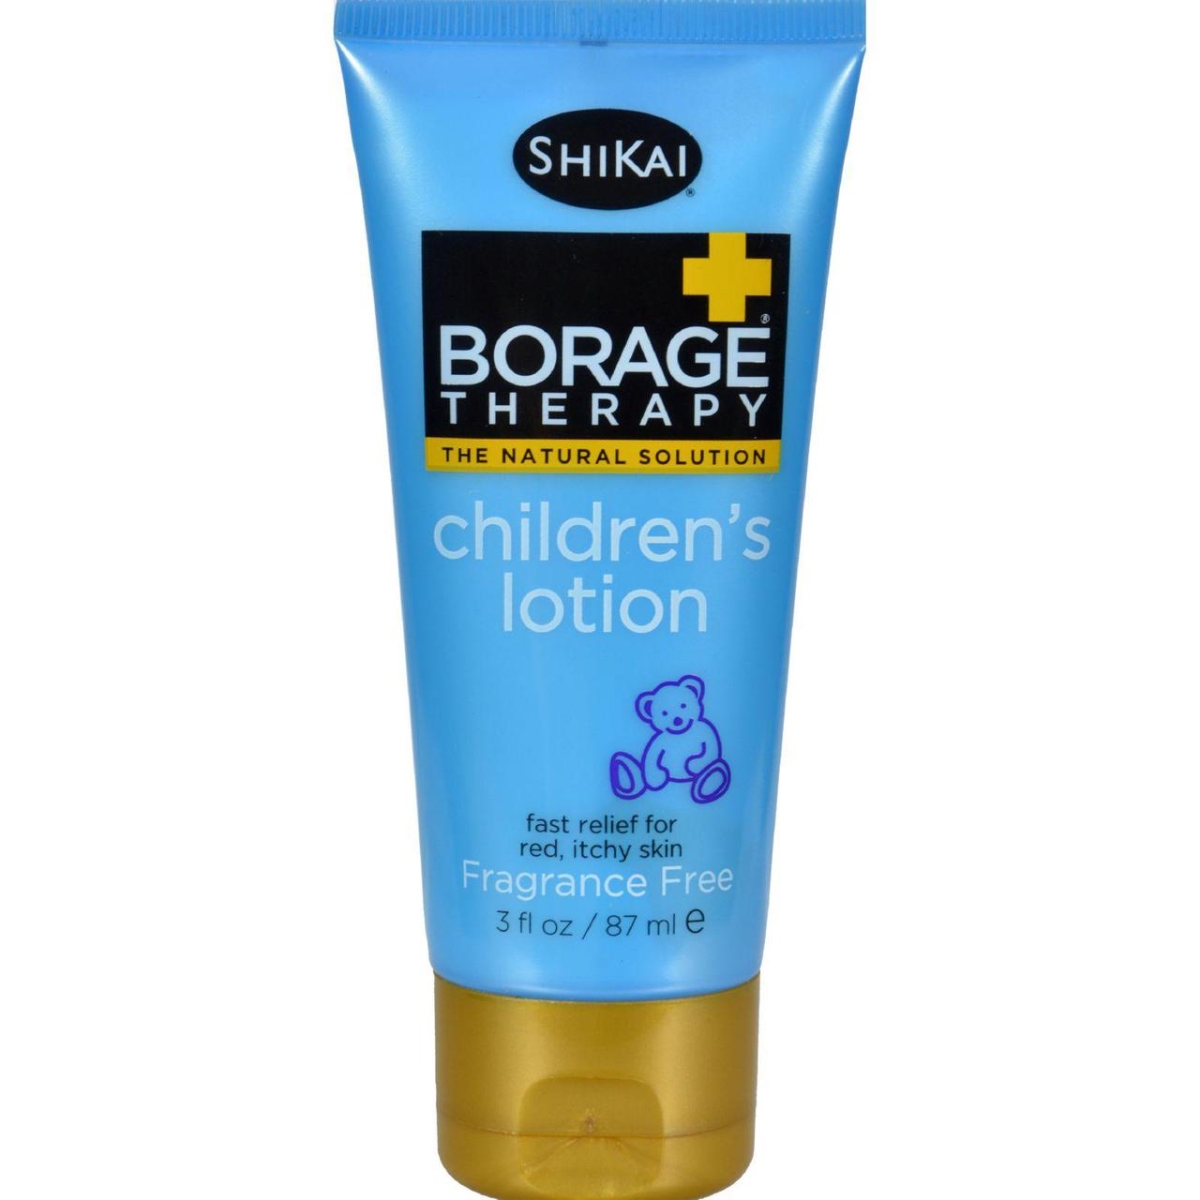 Hg0713263 3 Fl Oz Borage Therapy Childrens Lotion Fragrance Free